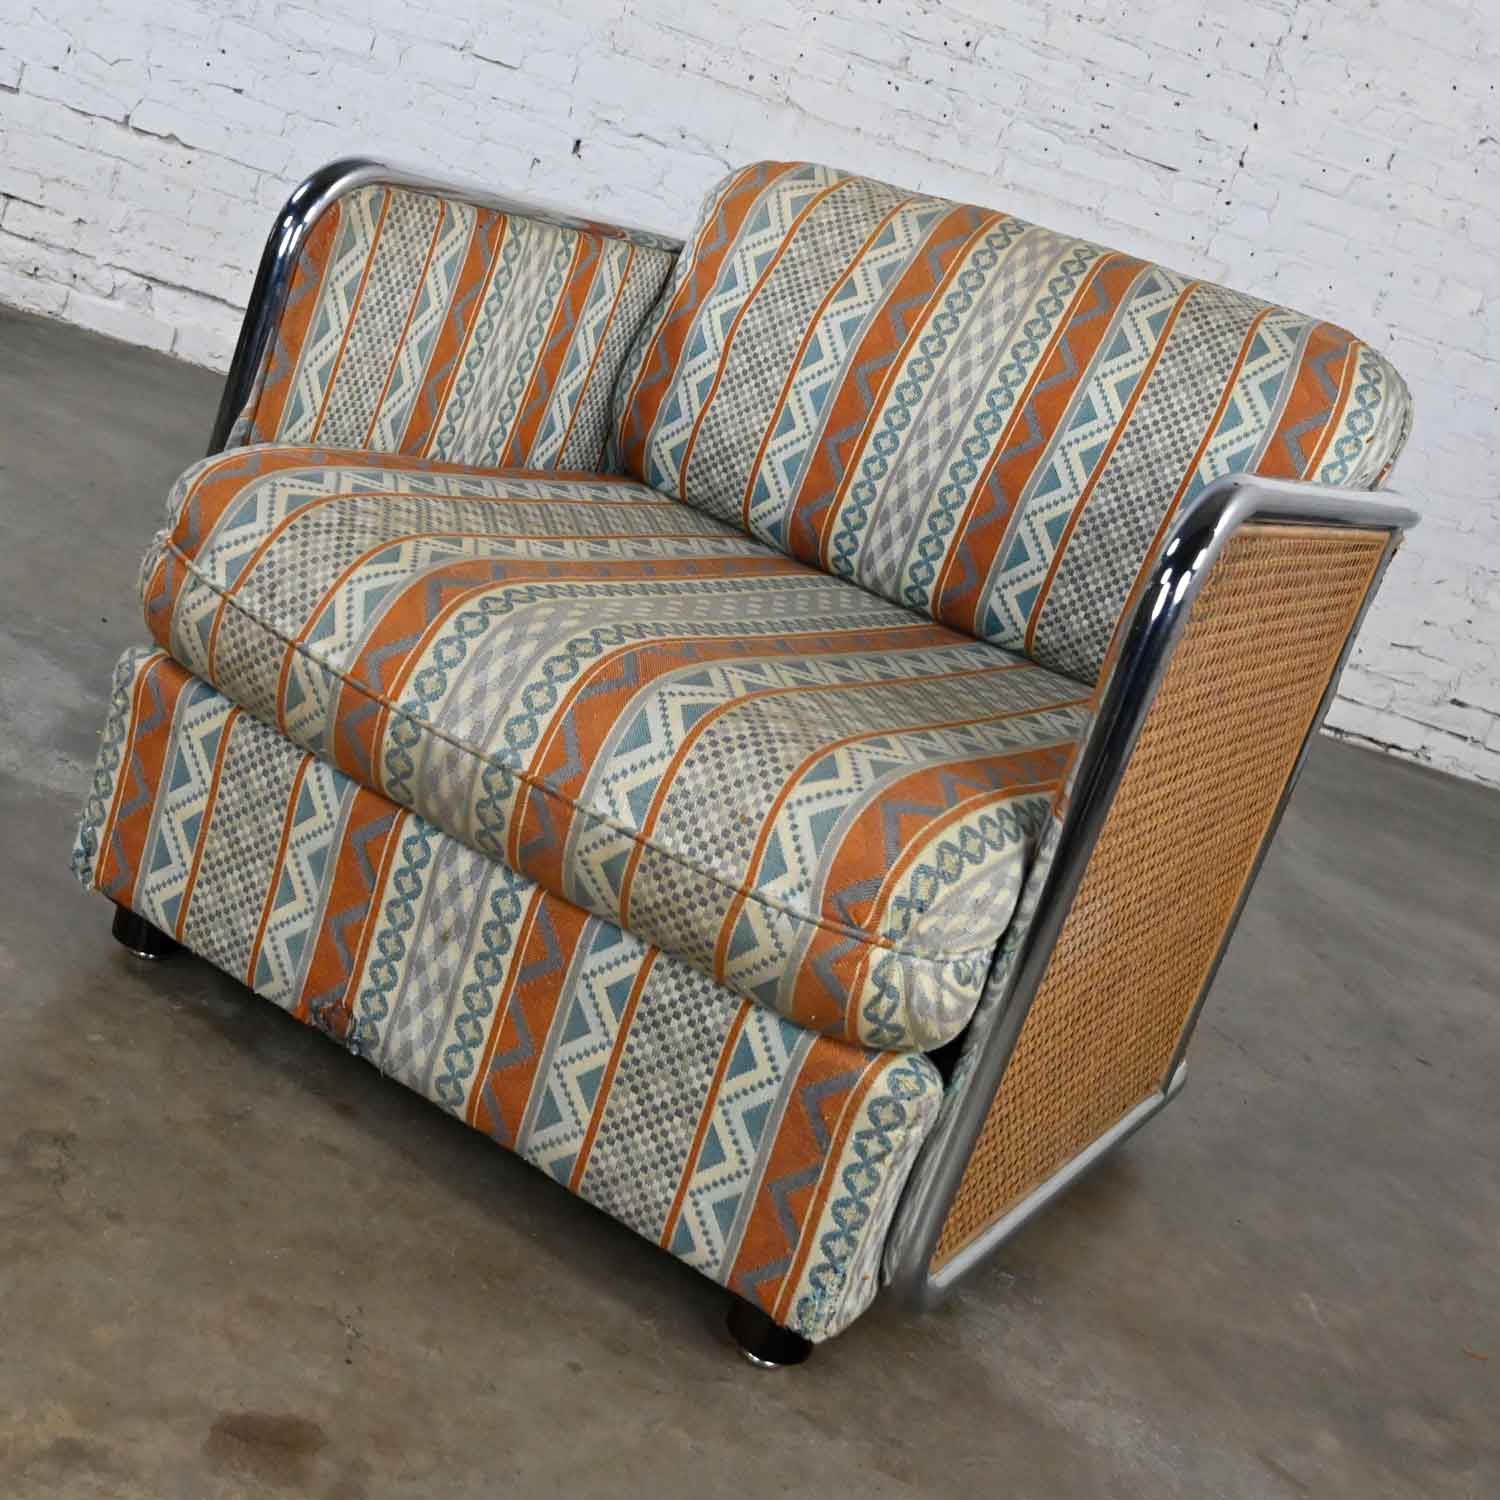 Vintage Milo Baughman Chrome & Cane Square Tub Chair Blue Rust Fabric Model #1438 by Thayer Coggin